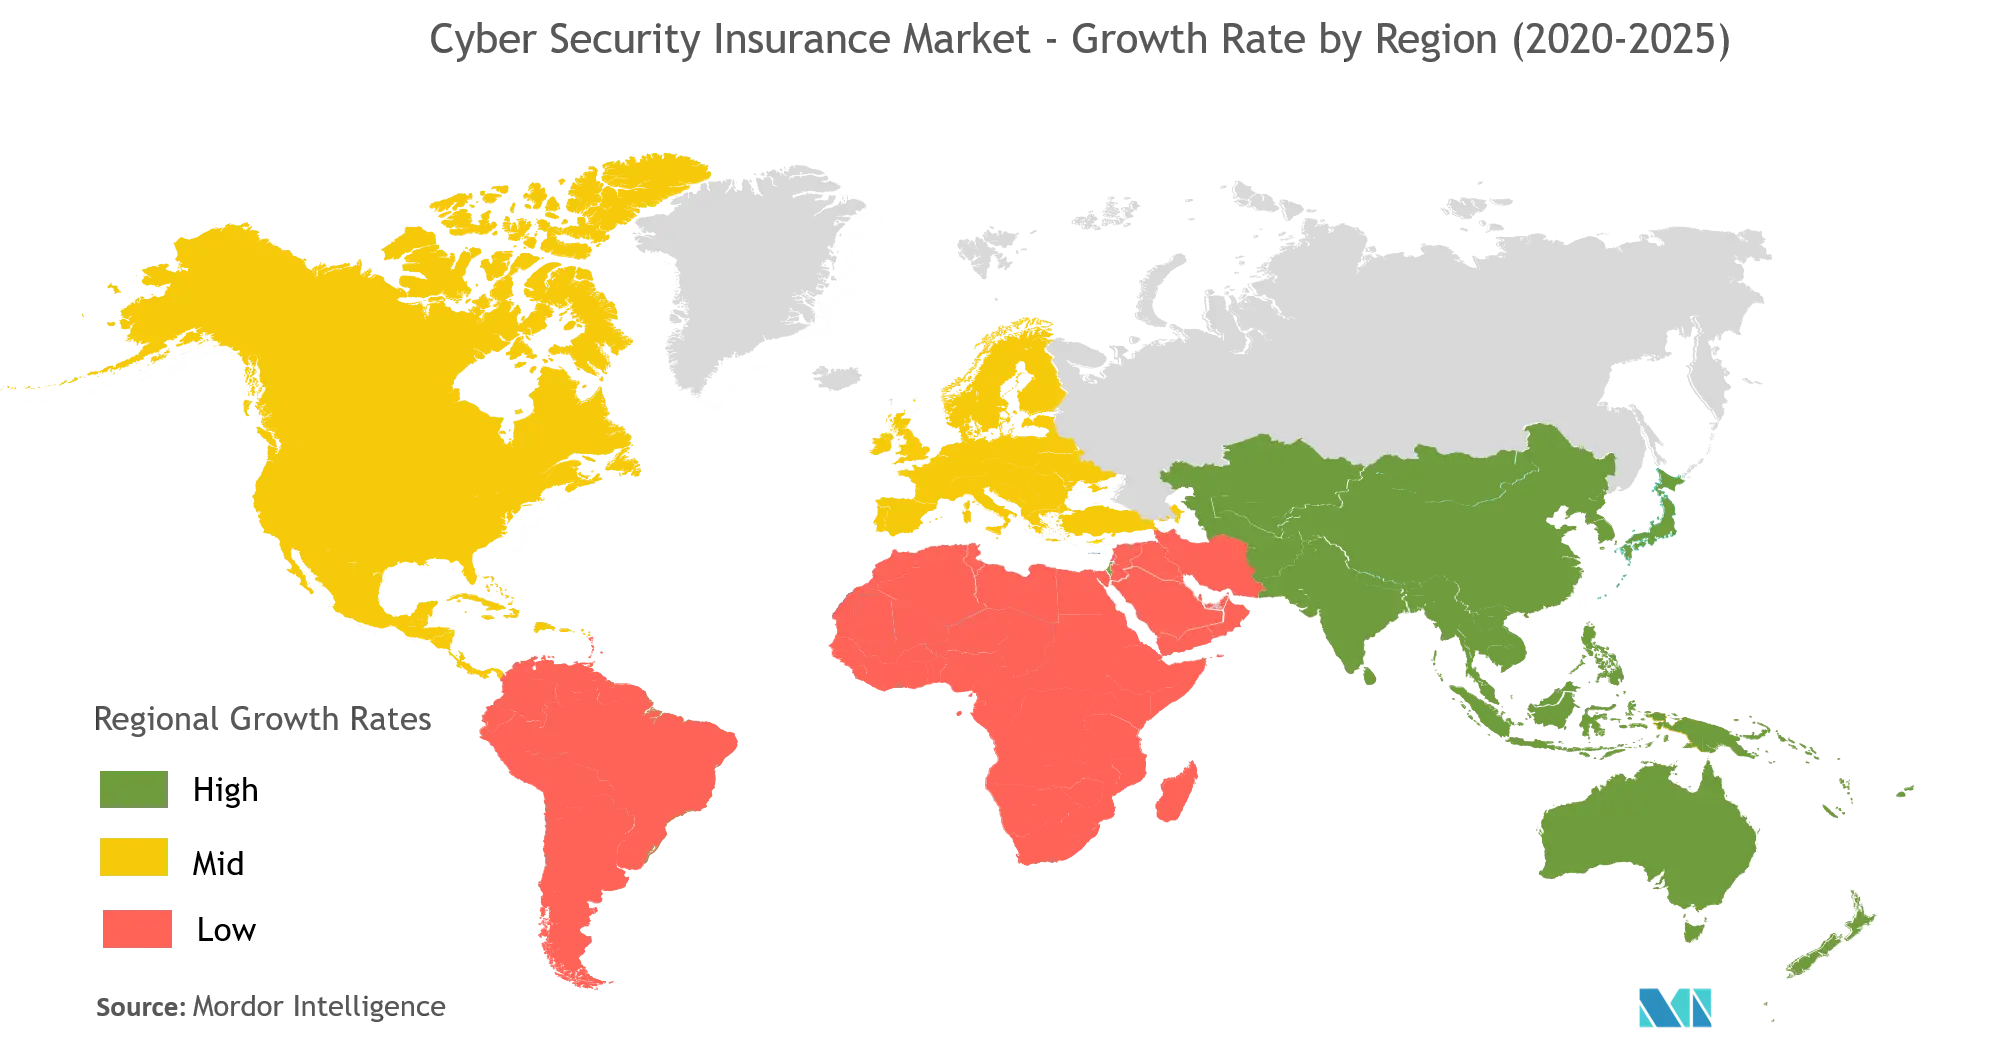 Cybersecurity Insurance Market Growth